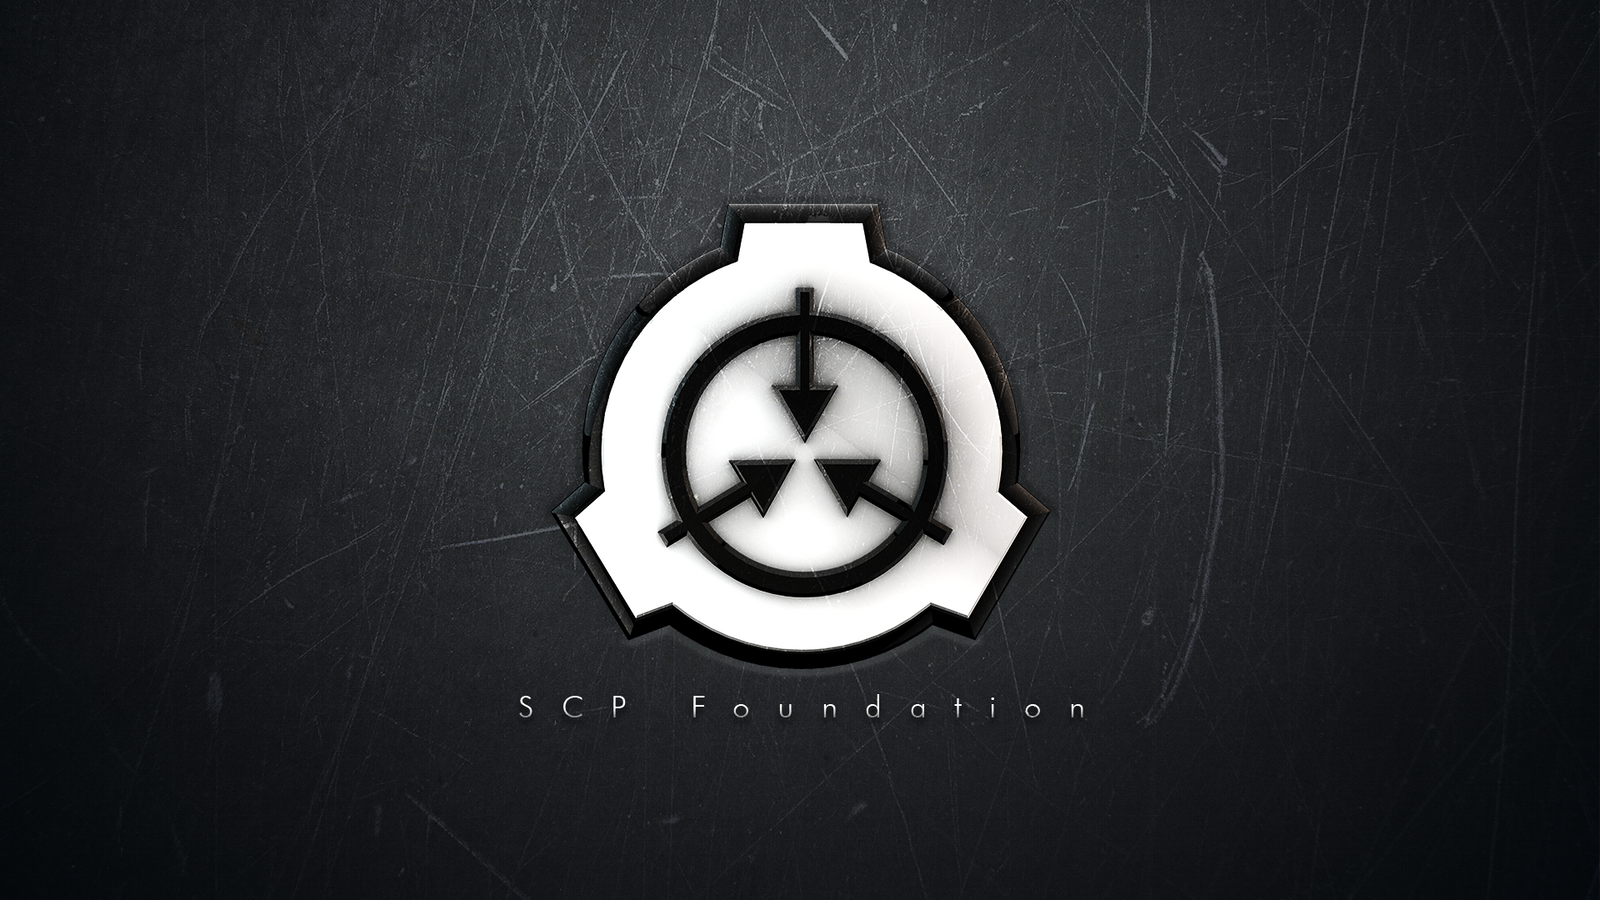 SCP Foundation - Background 1 by Zenith-strife on DeviantArt